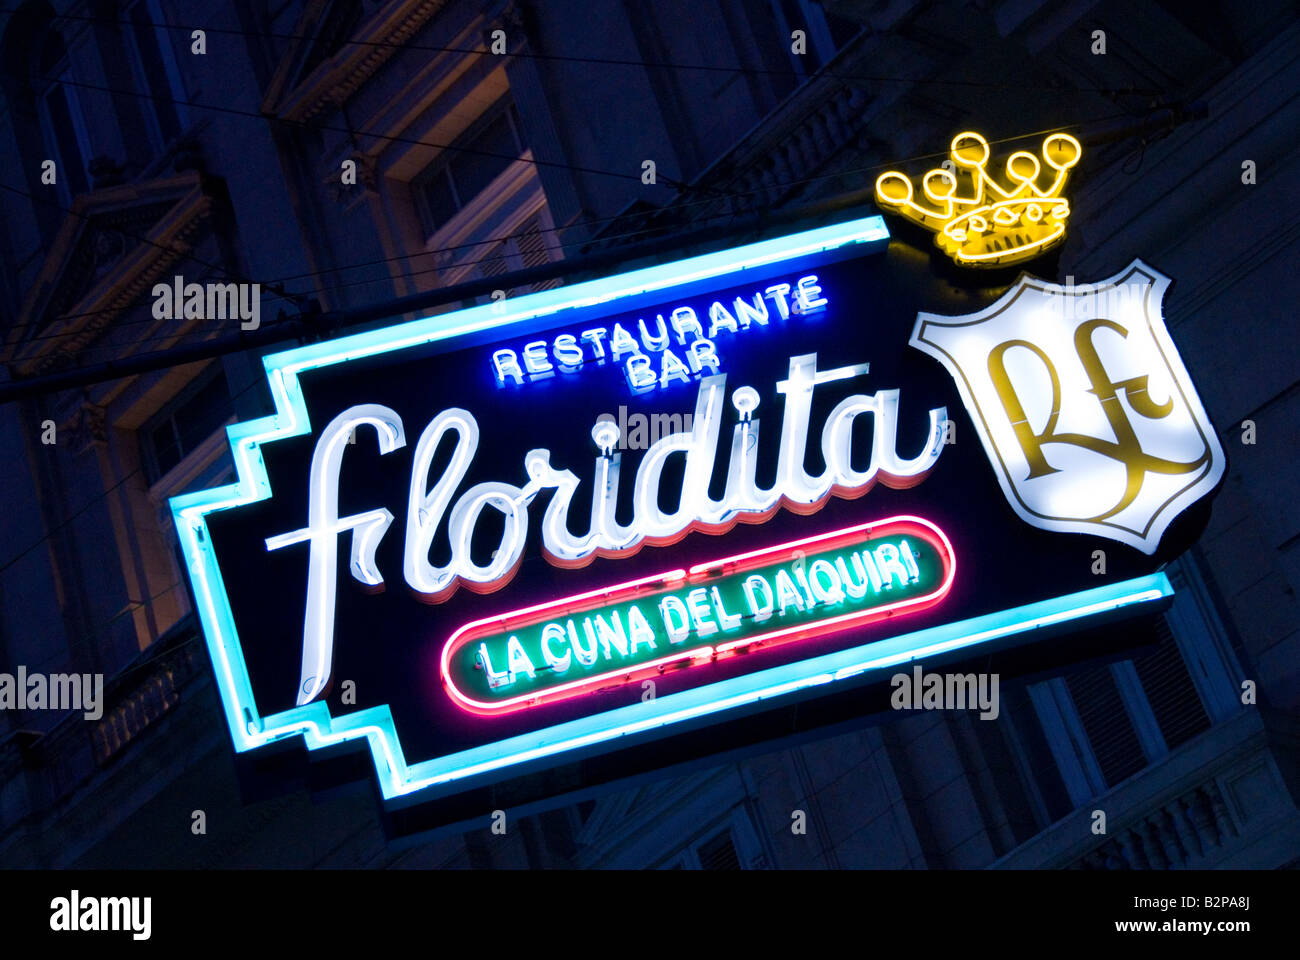 Leuchtreklame für El Floridita bar La Habana Vieja-Kuba Stockfoto